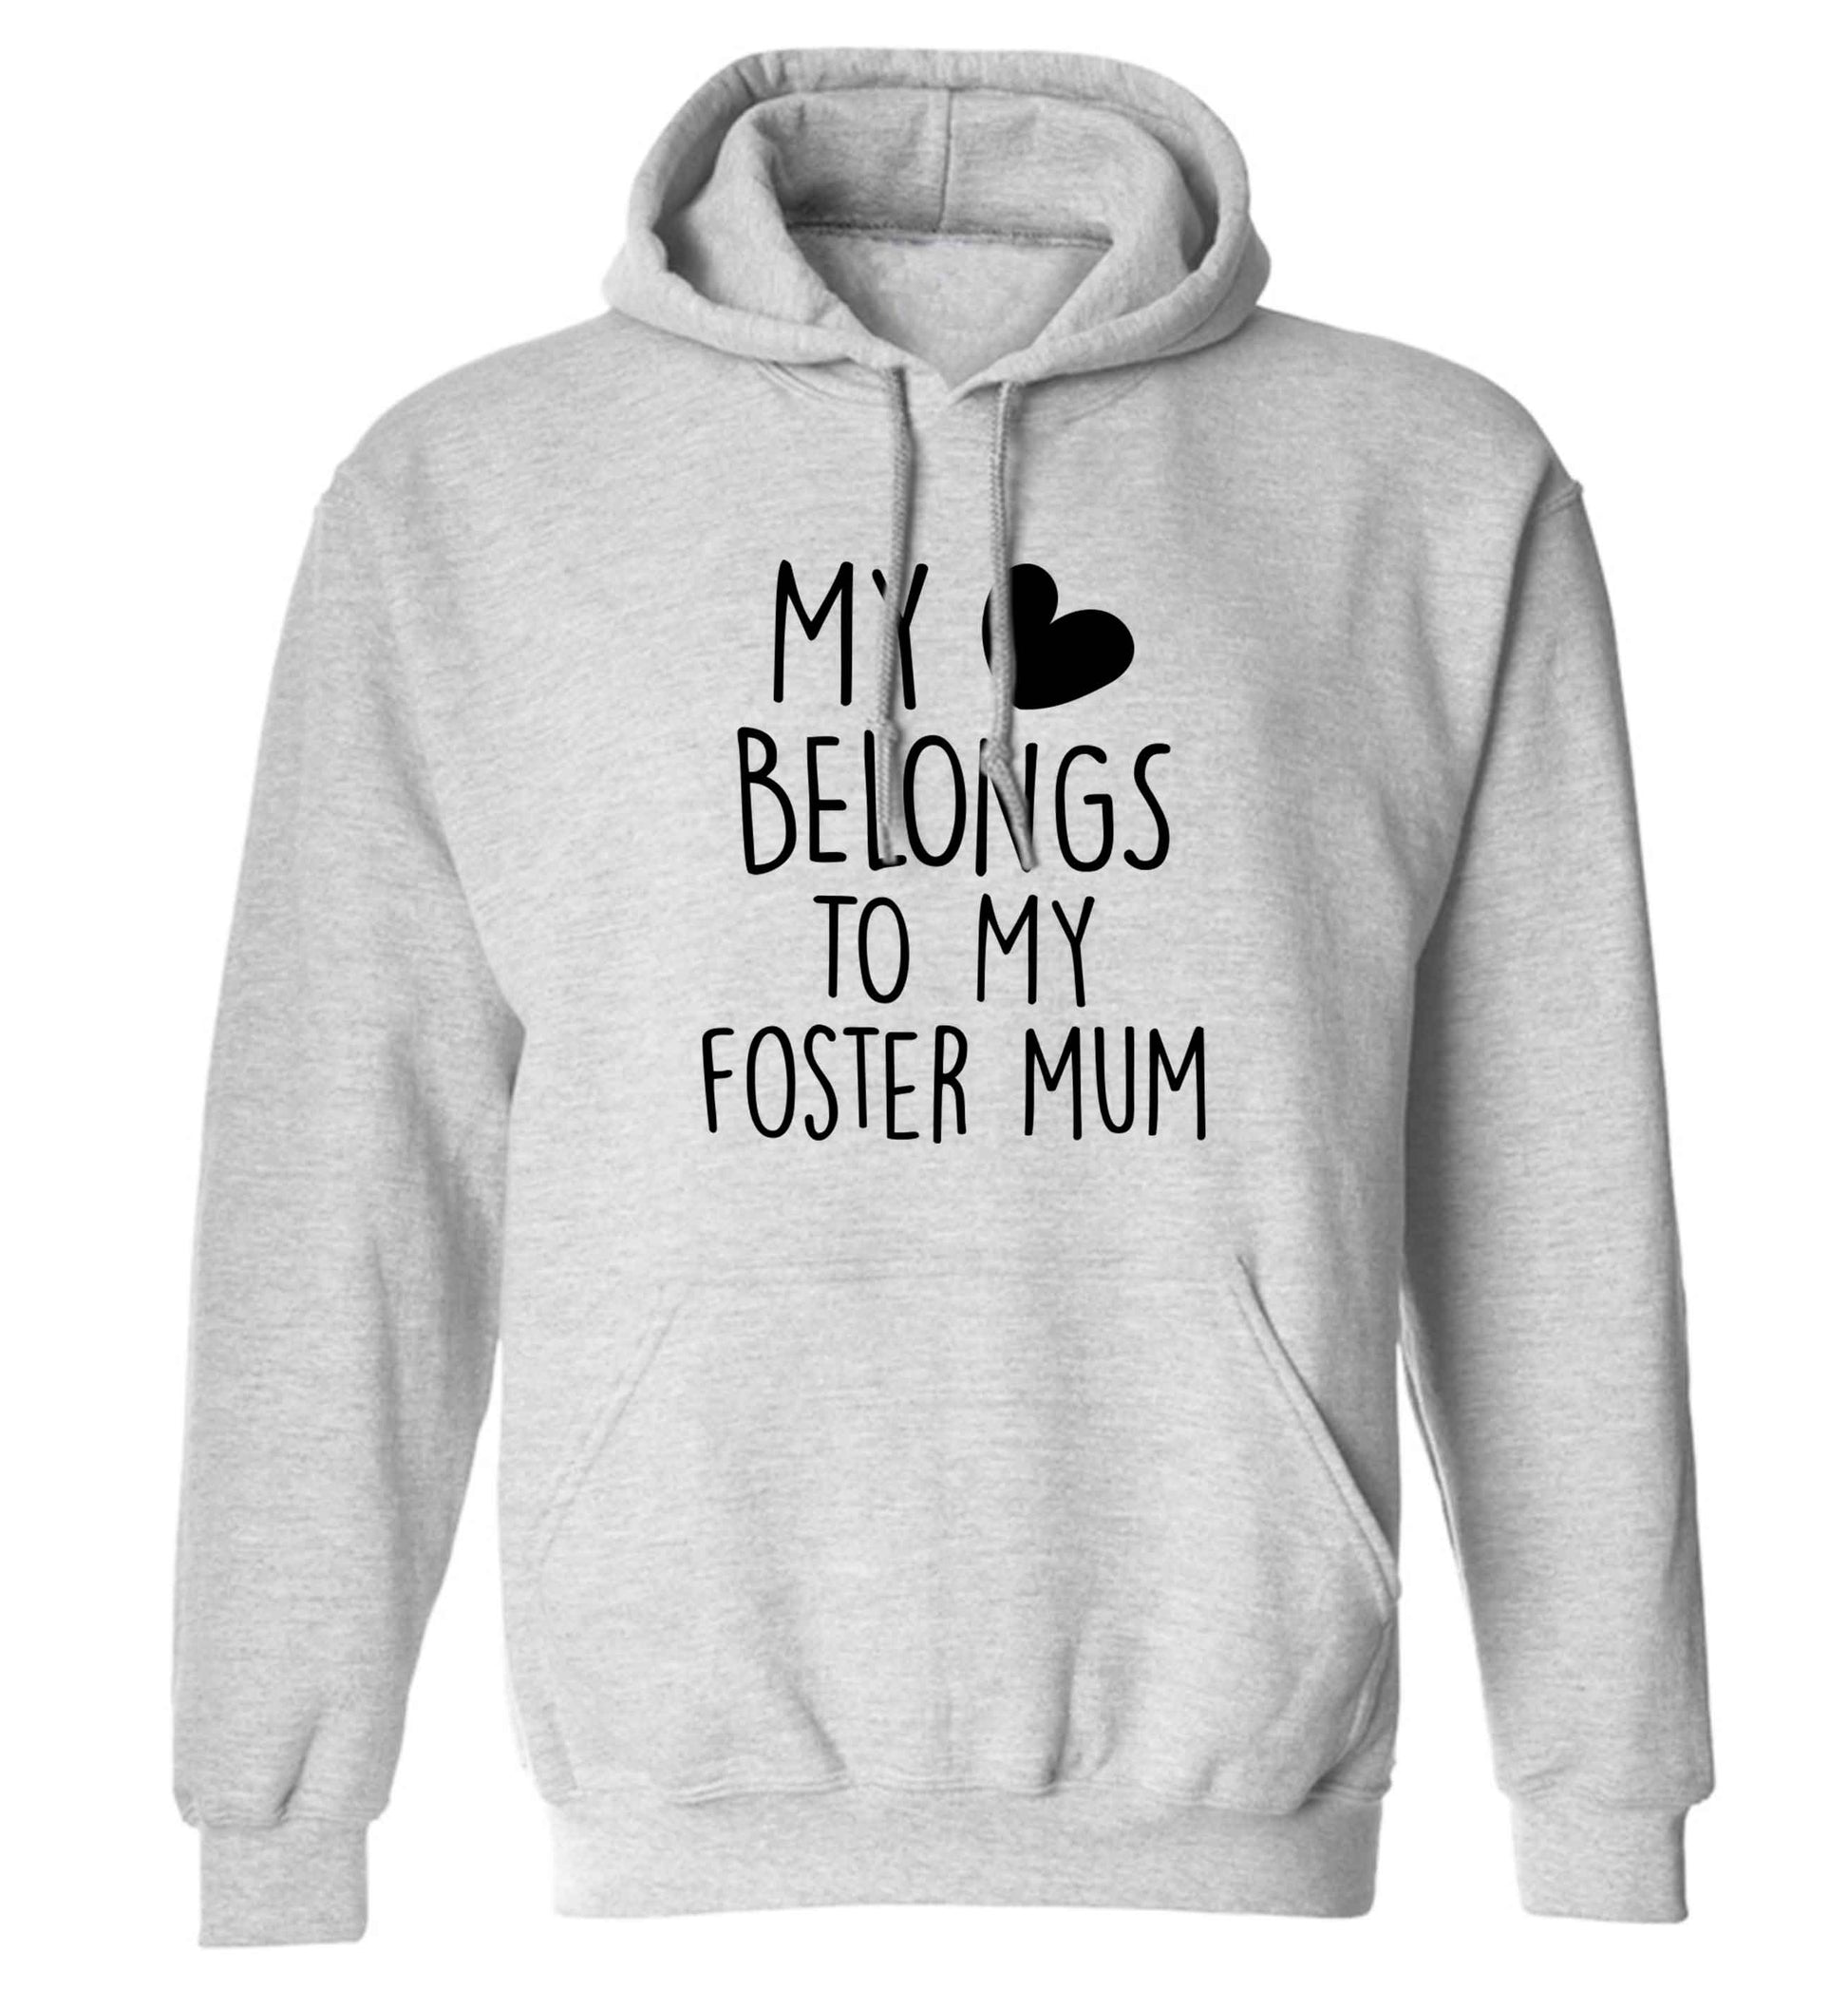 My heart belongs to my foster mum adults unisex grey hoodie 2XL